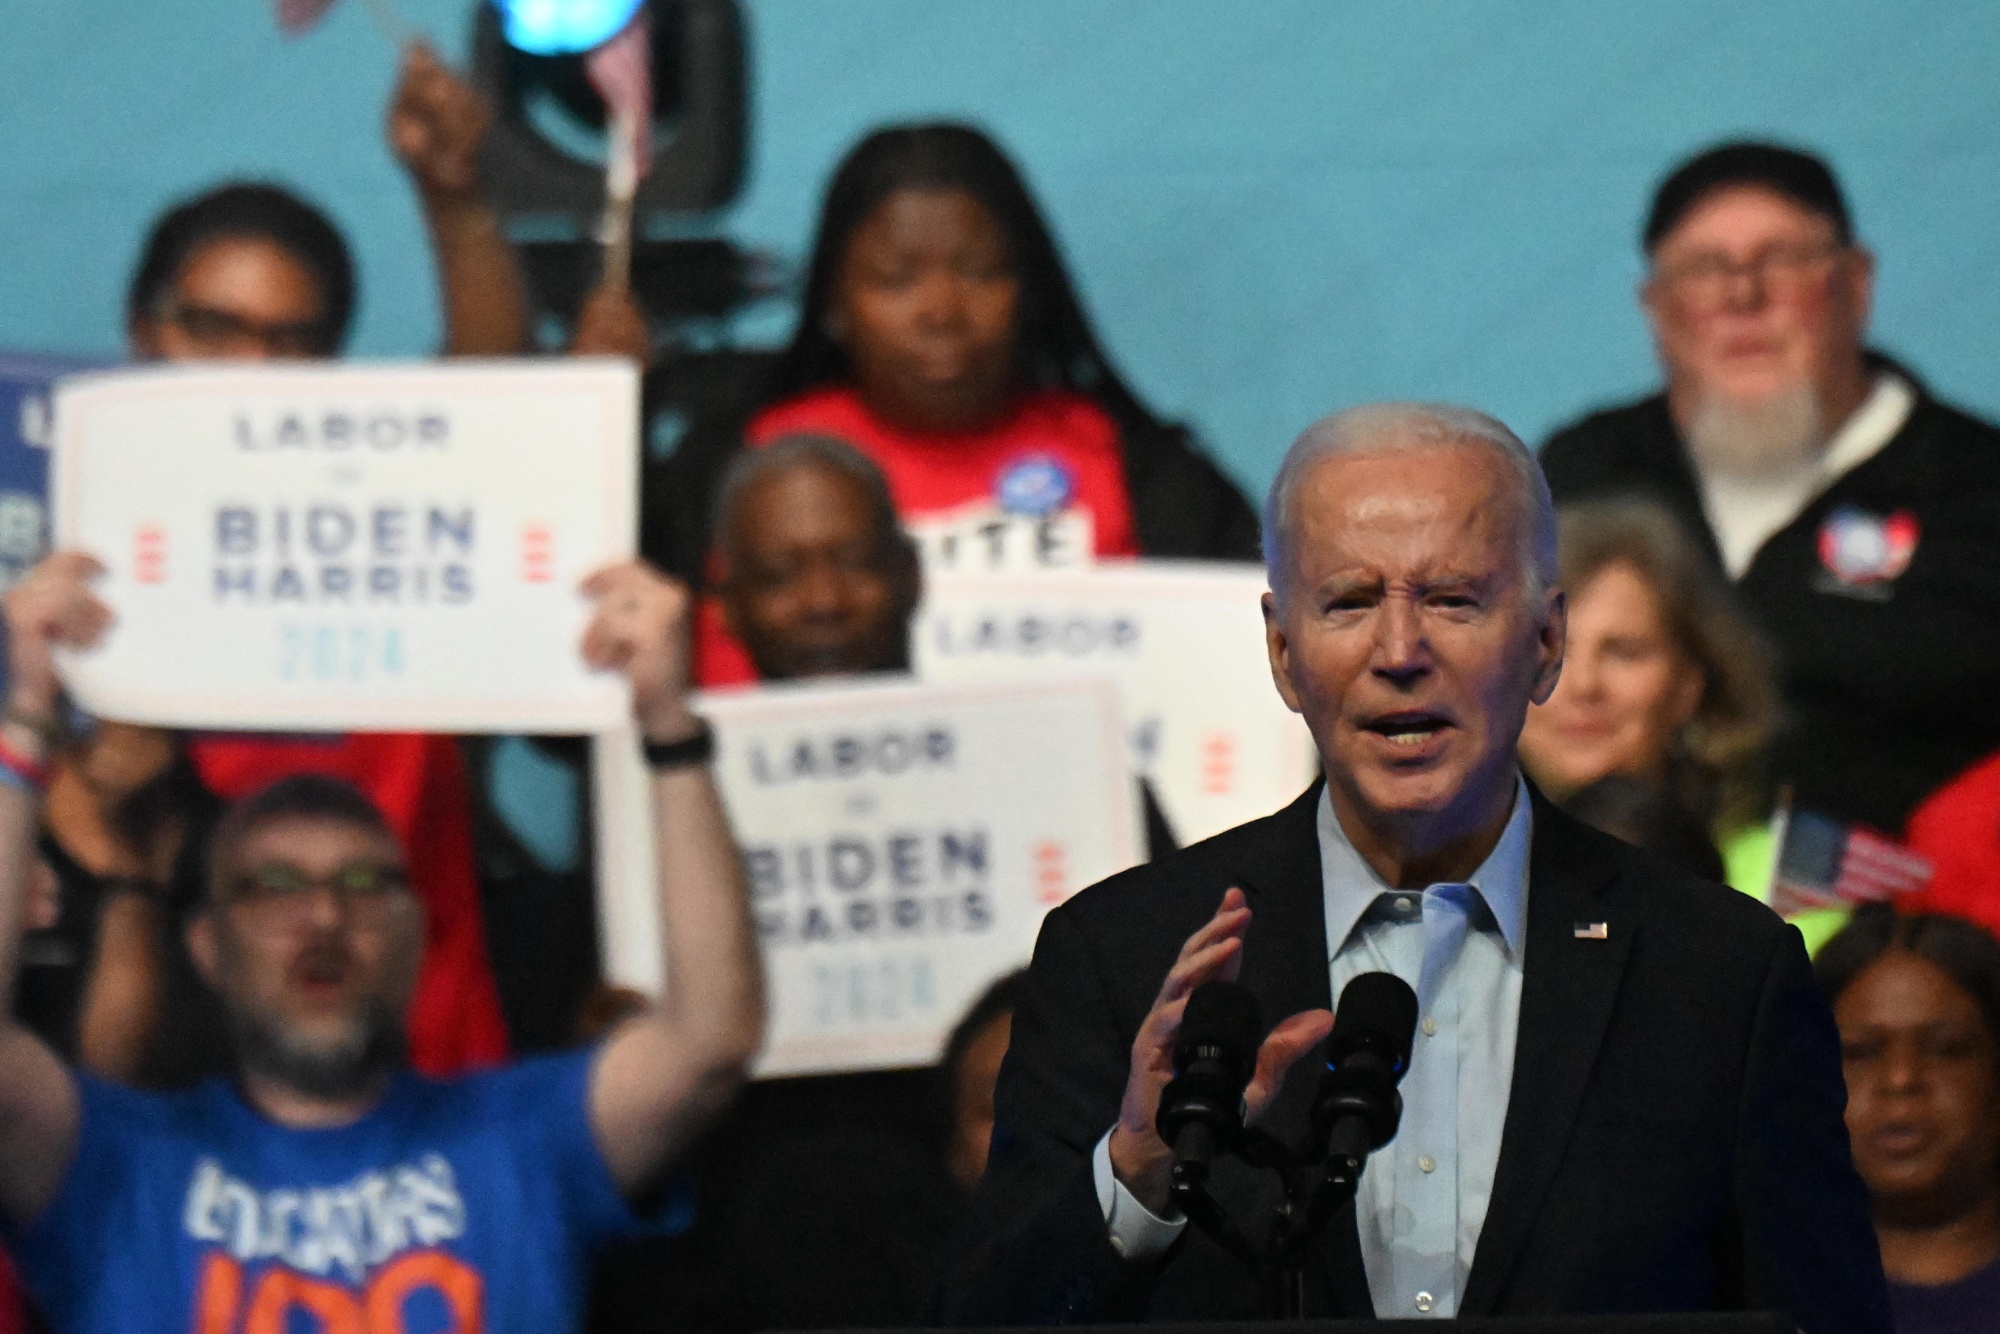 Joe Biden adressess union workers in Philadelphia, Pennsylvania in June.